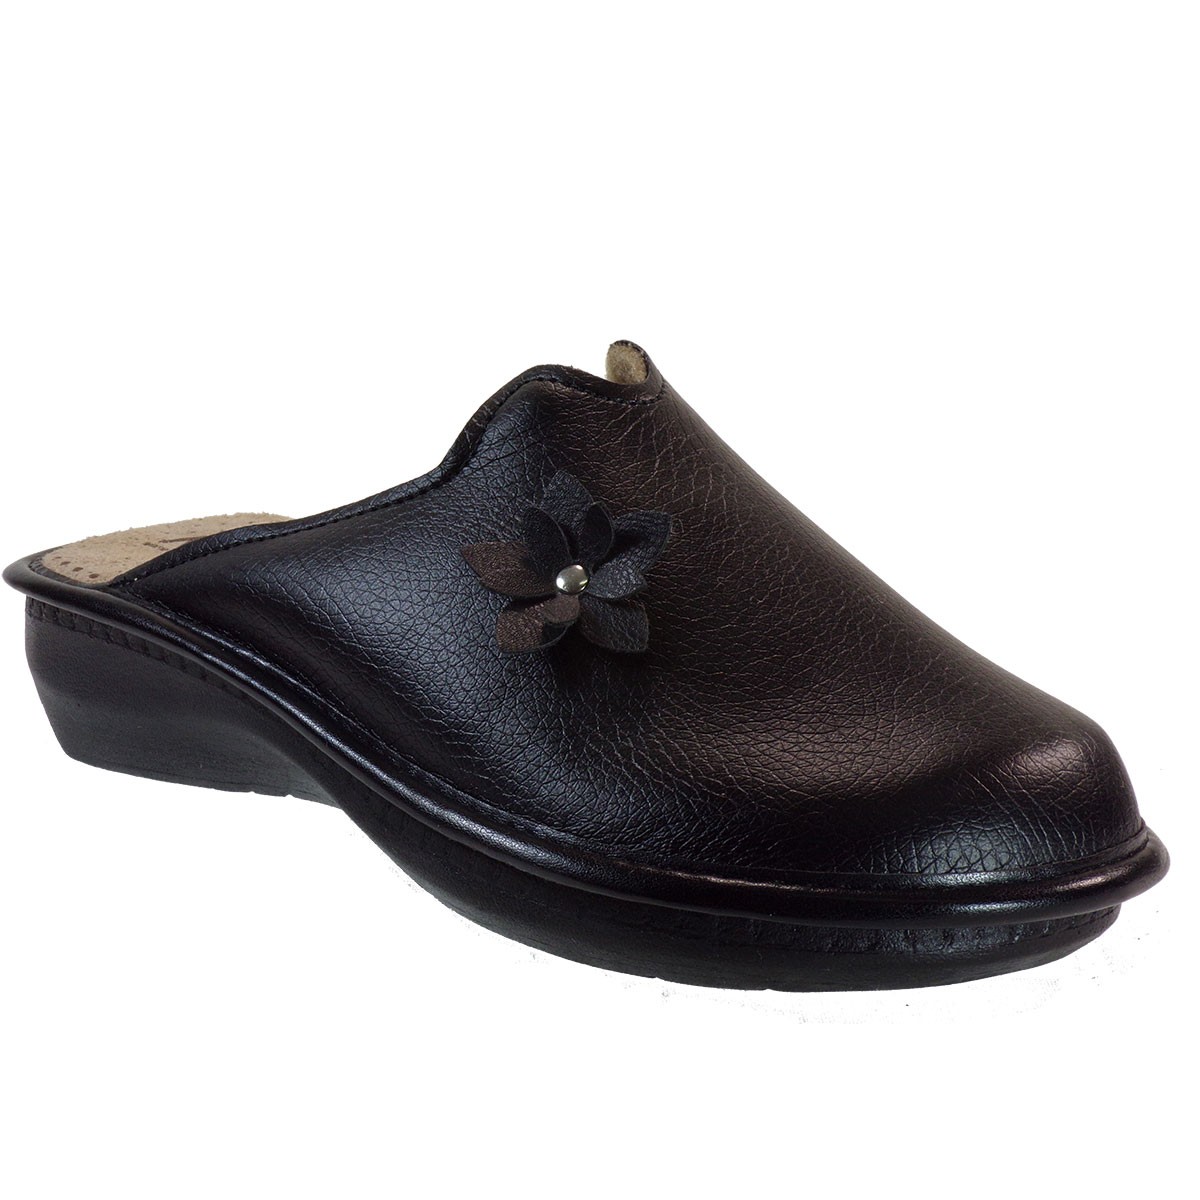 Bagiota Shoes Γυναικείες Παντόφλες 00150 Μαύρο bagiotashoes 00150 mauro